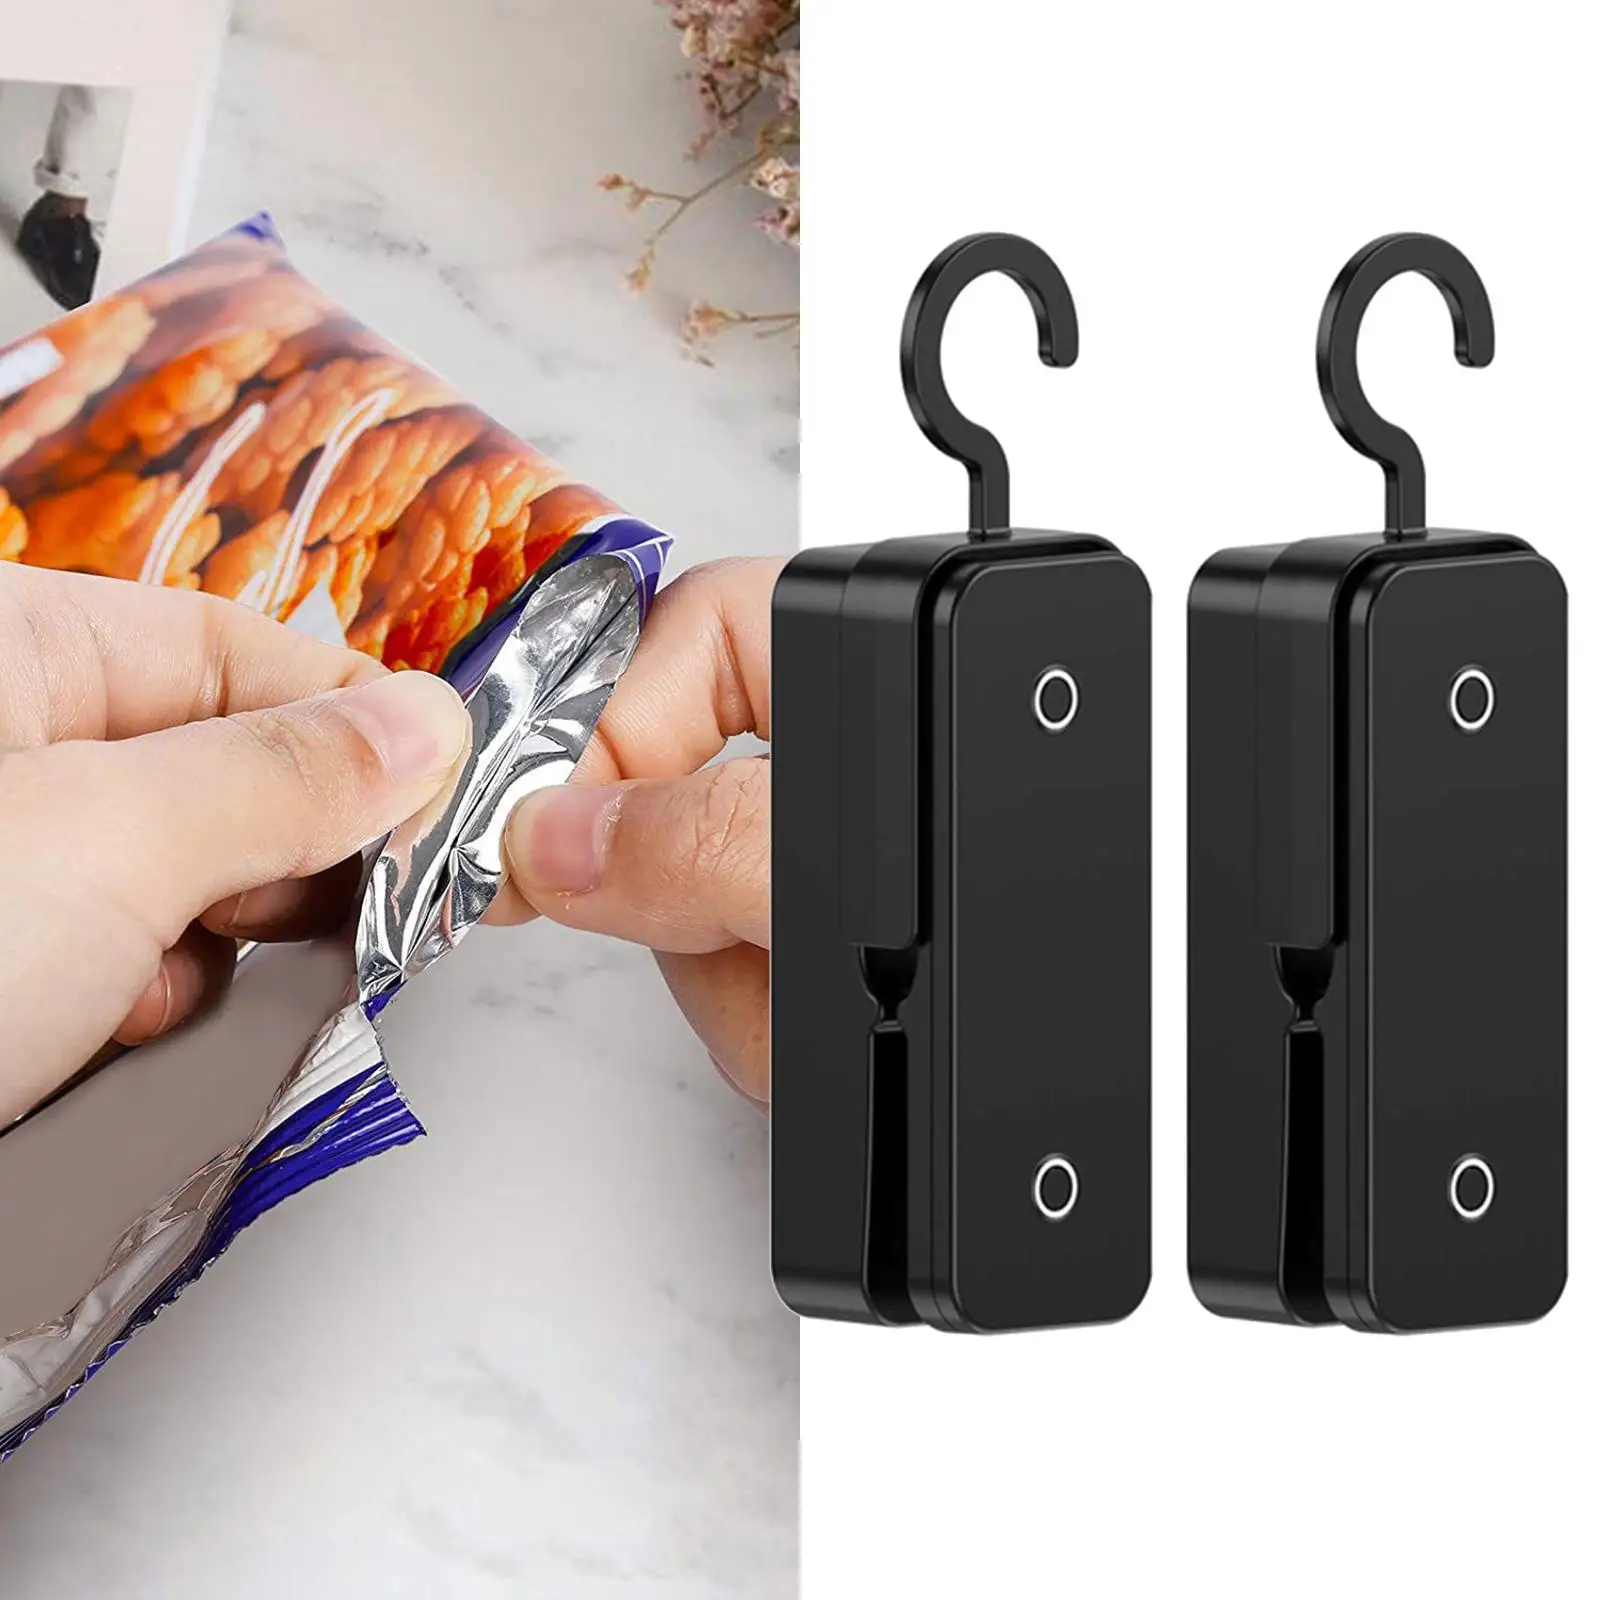 2/Set Battery Operated Pocket Size Bag Sealer with Cutter Food Bag Sealer for Chip Bags, Snack Bags, Foil Bag, Plastic Bags,